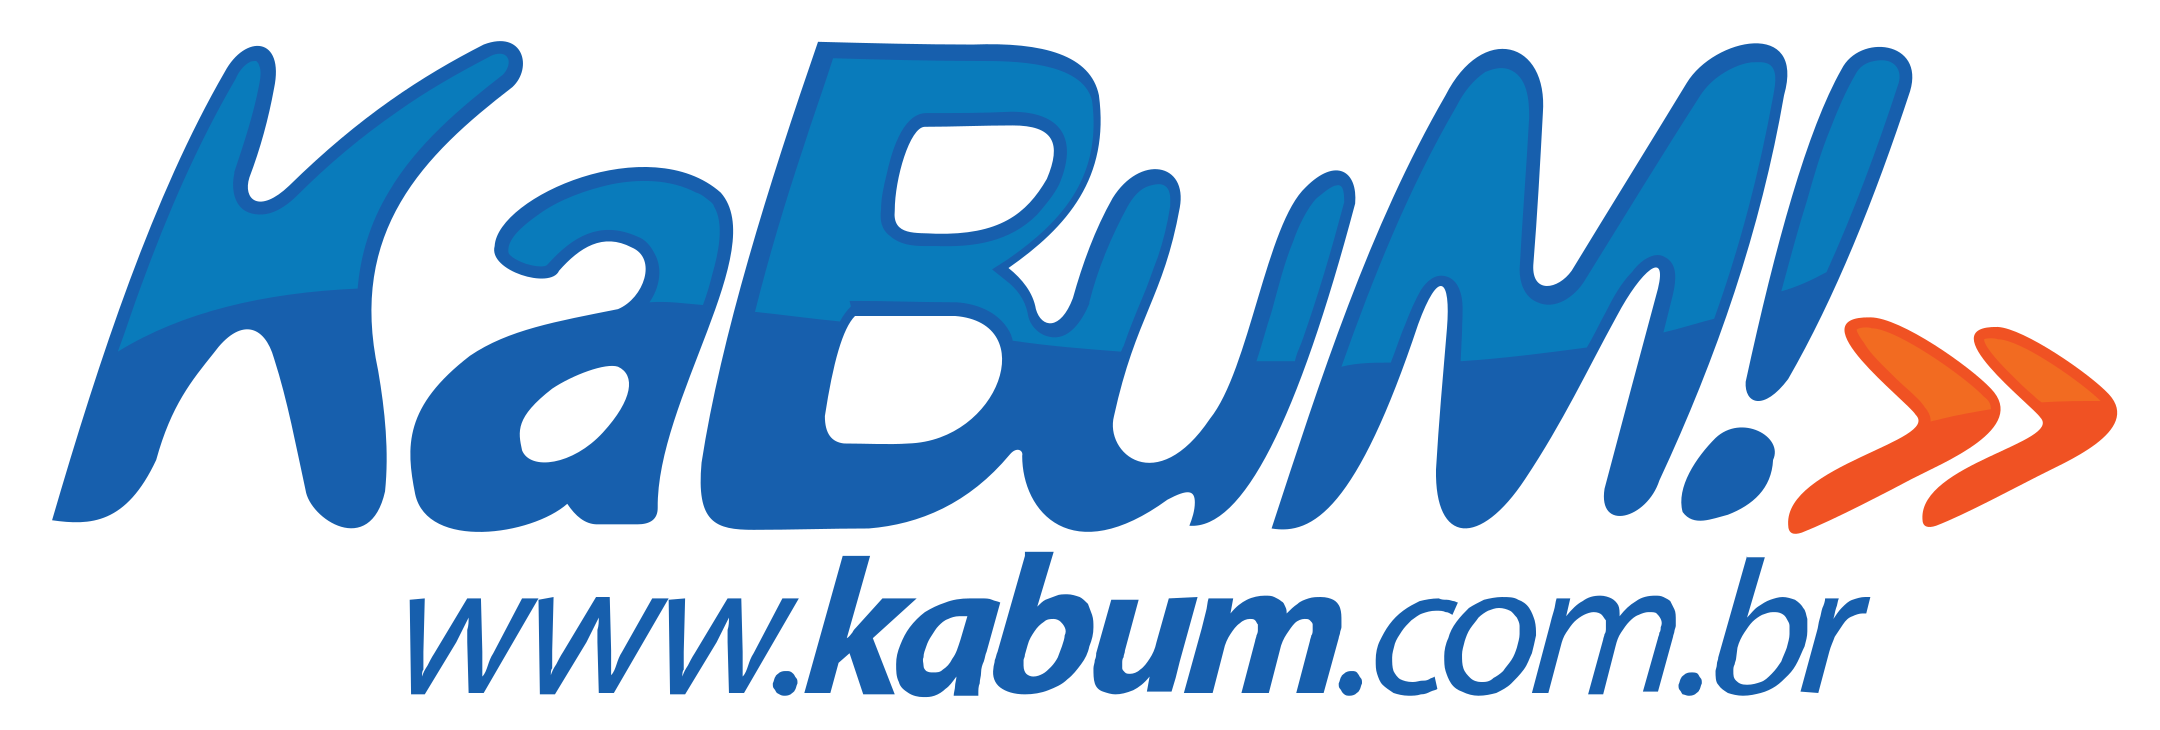 Kabum Logo.